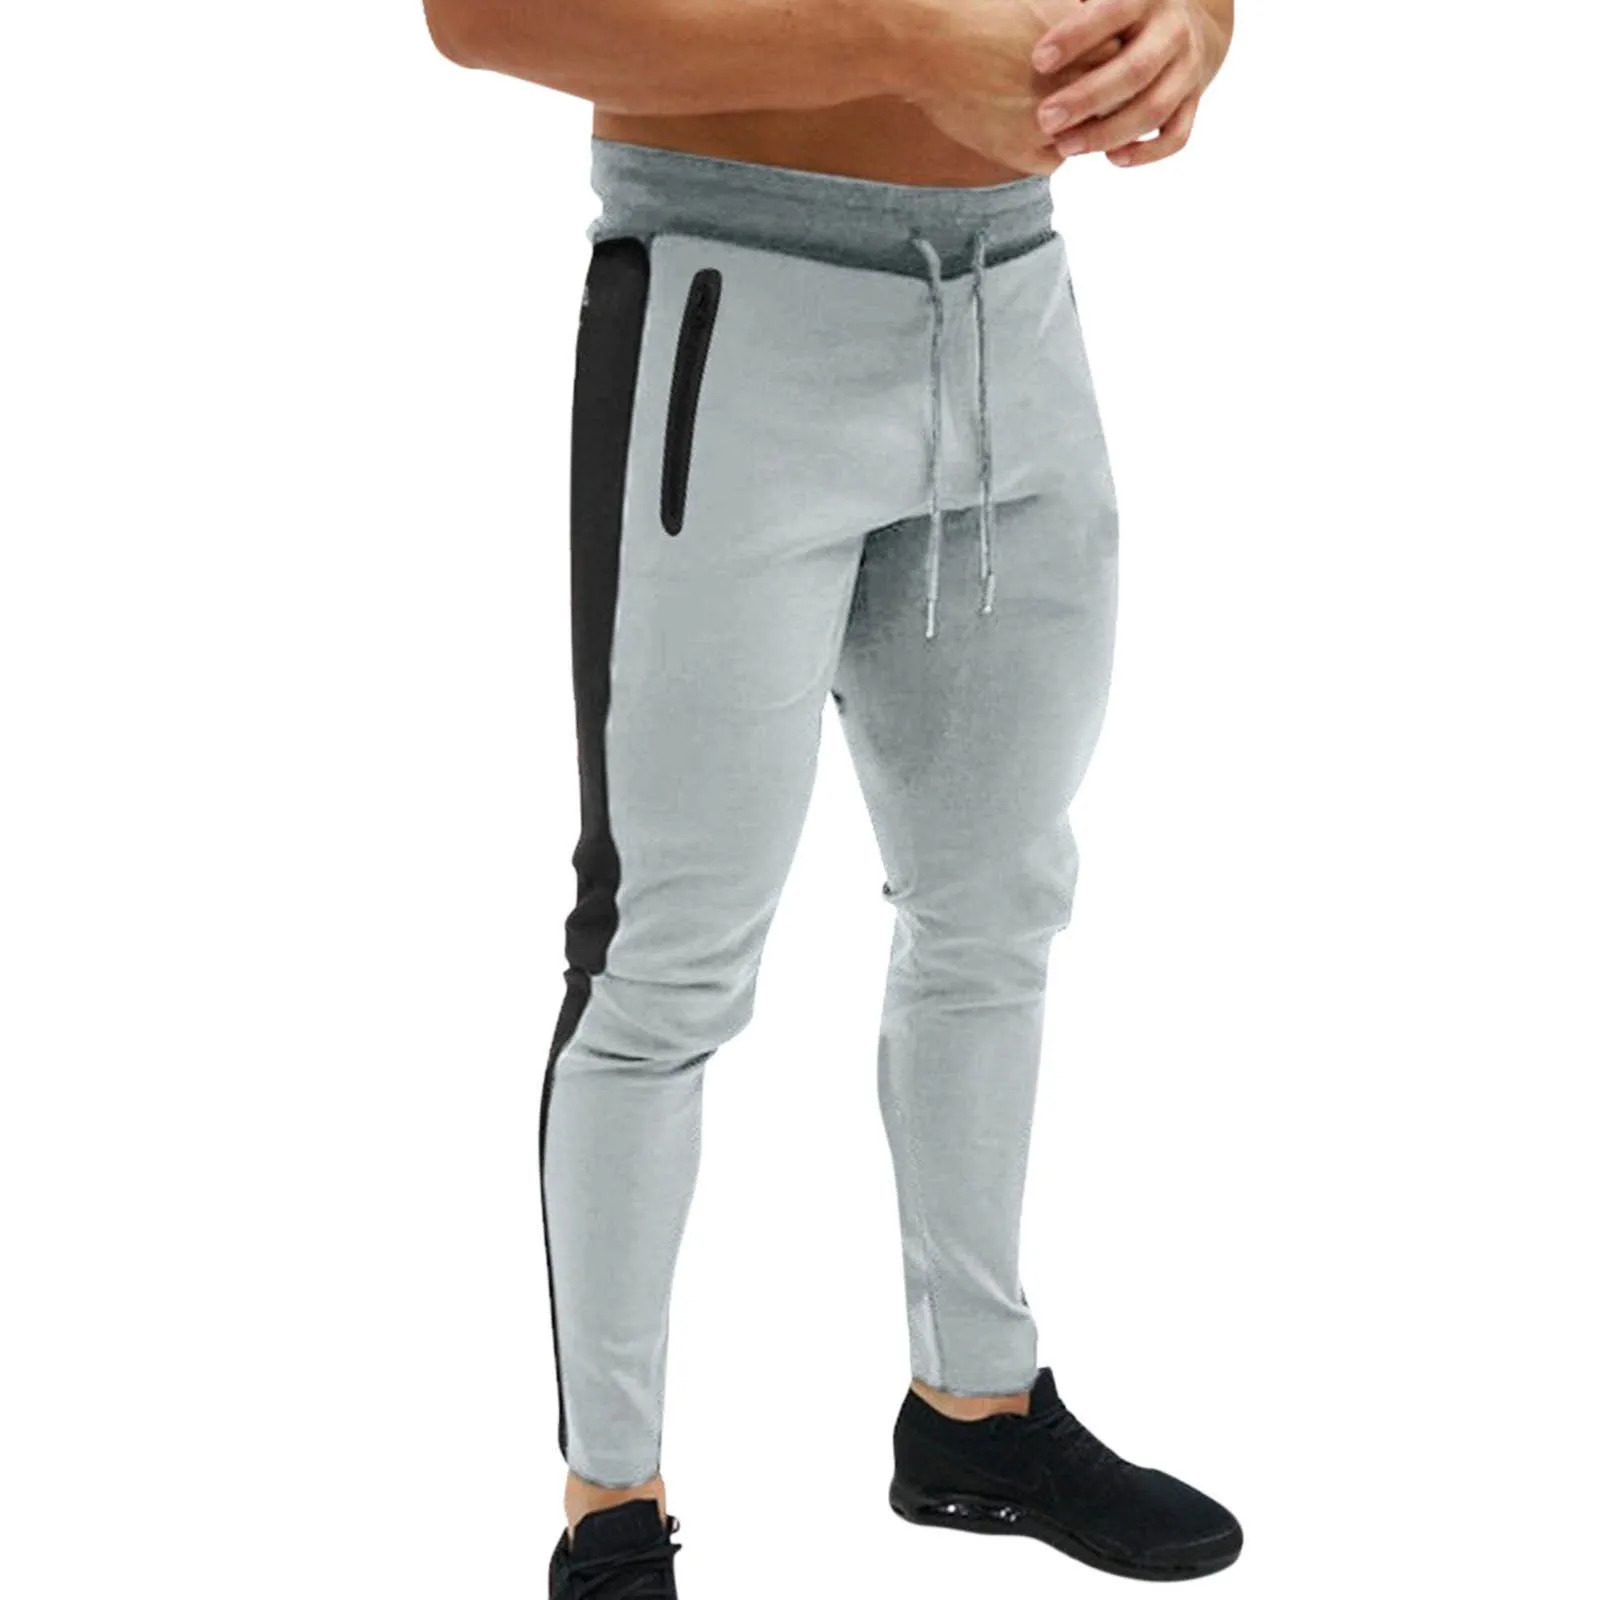 Men's Jogging Pants Sports Sweatpants Fitness Slim Trousers Casual Jogging Street Pants With Zipper Pockets Men's clothing fruit of the loom sweatpants